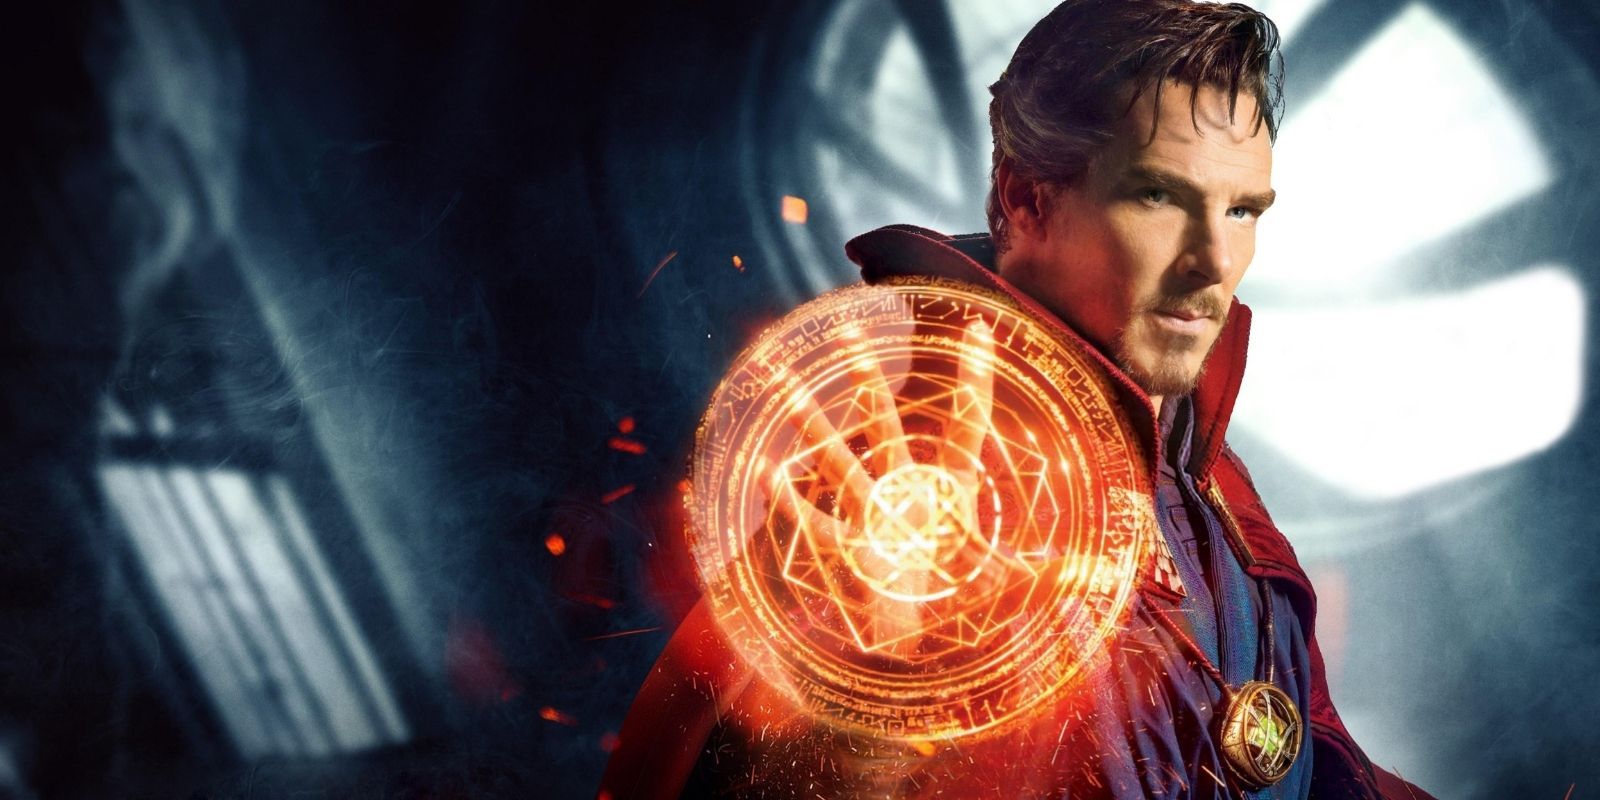 Benedict Cumberbatch as Doctor Strange in the MCU